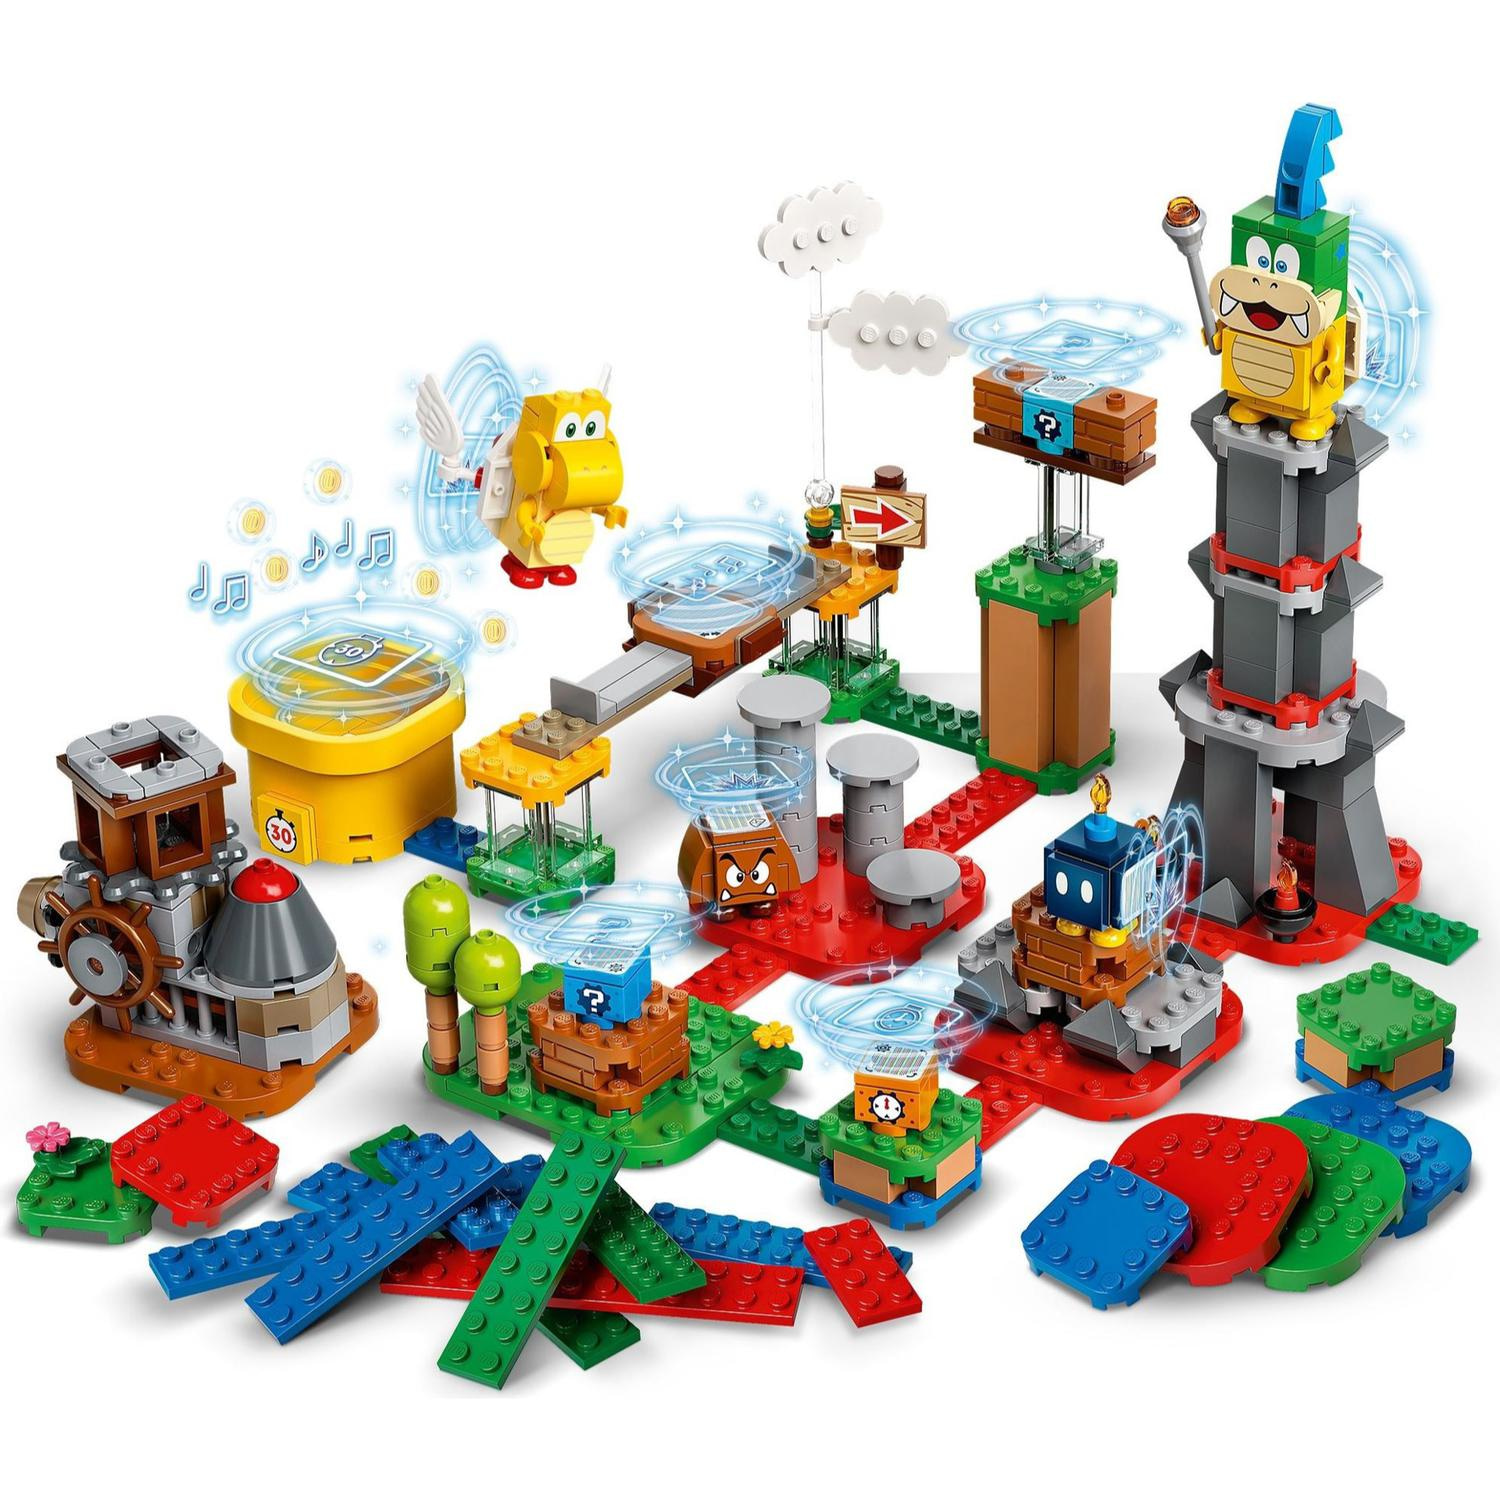 Lego Super Mario 71380 Master Your Adventure Maker Set